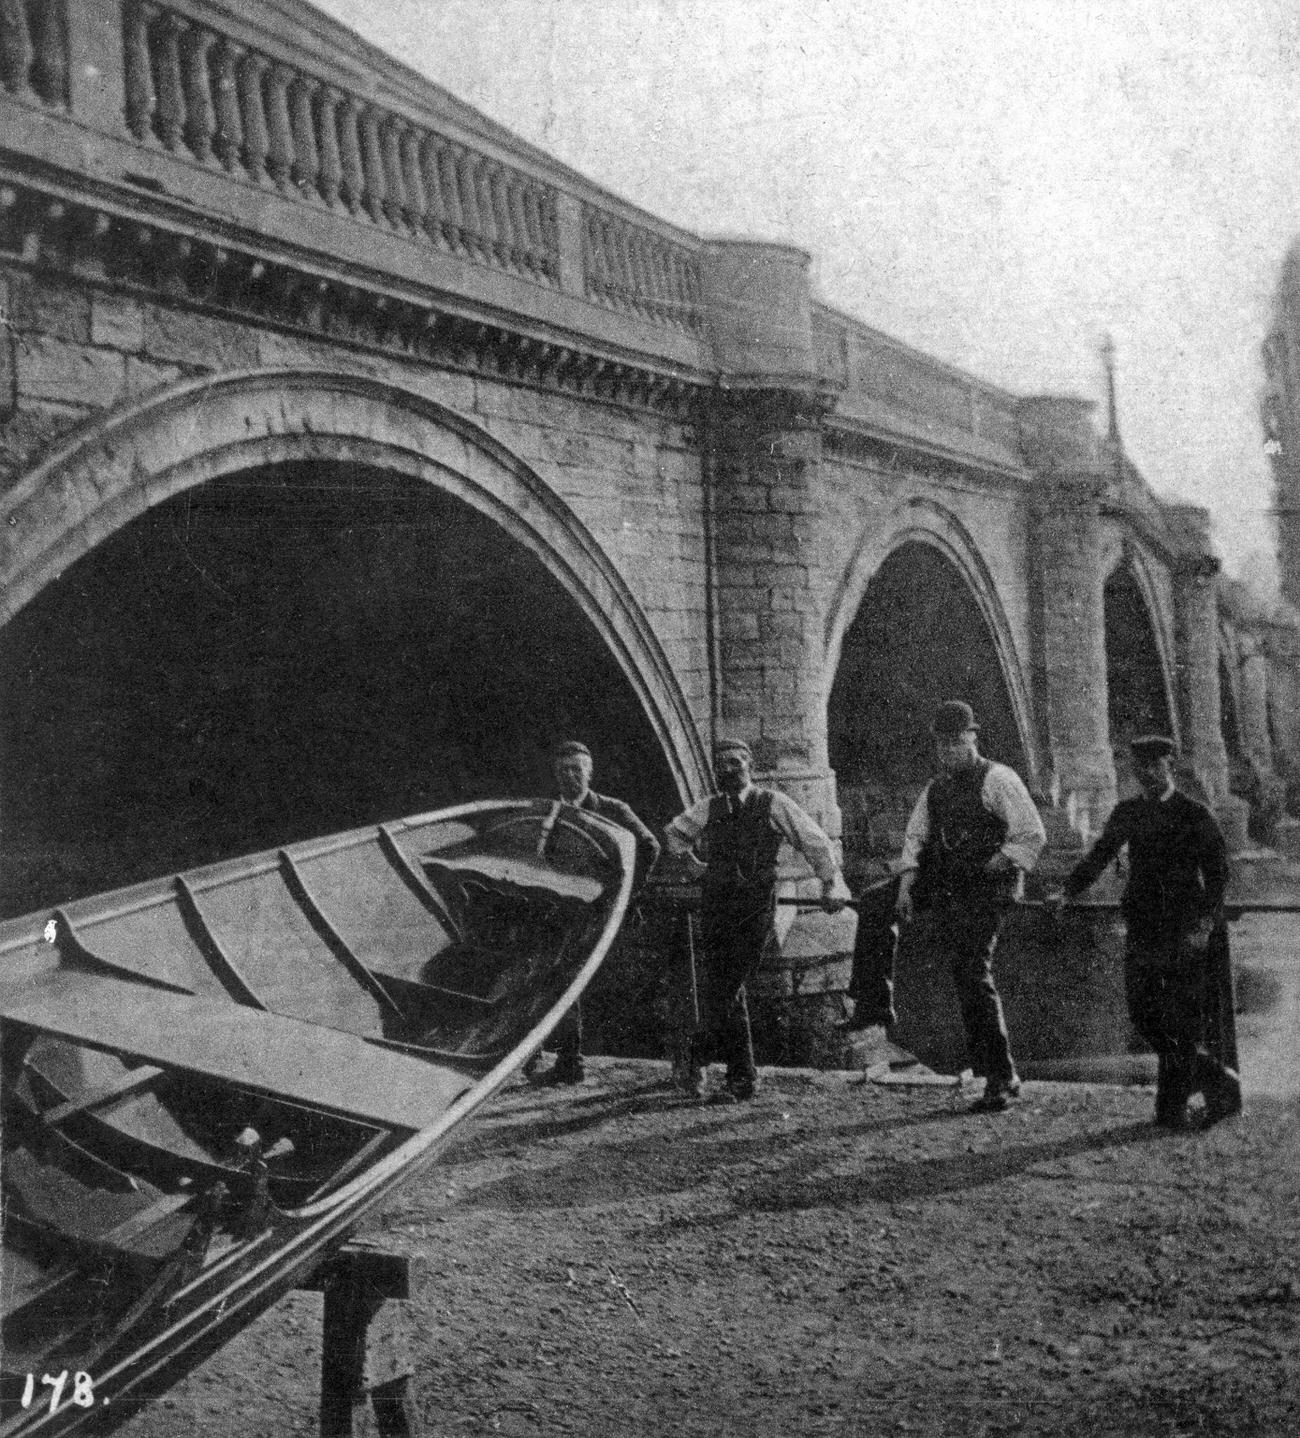 Richmond Bridge in London, 1900s